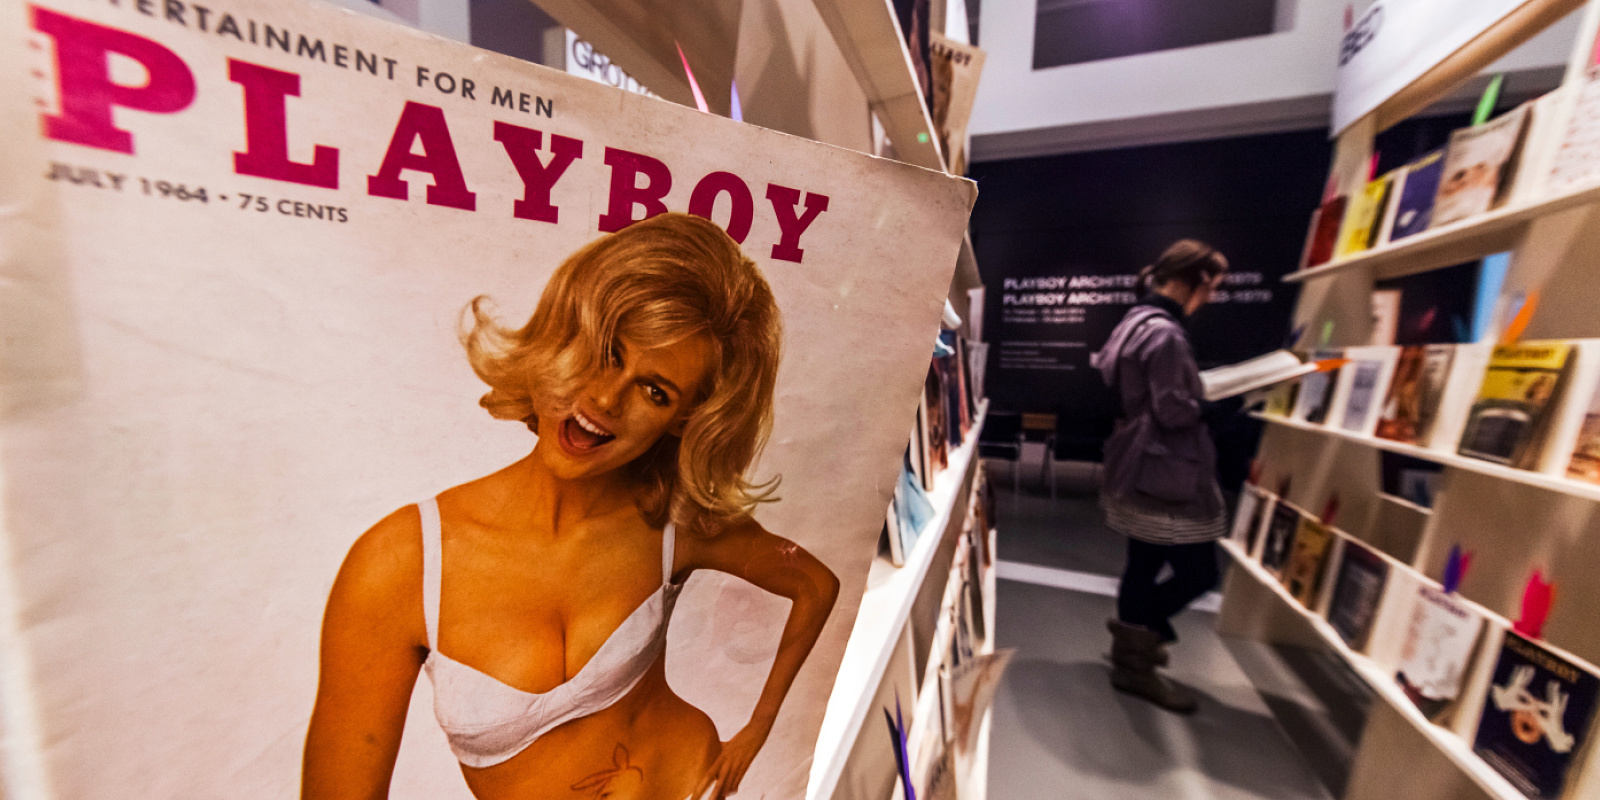 Tentoonstelling Playboy Architektur, Duits Architectuurmuseum, Frankfurt